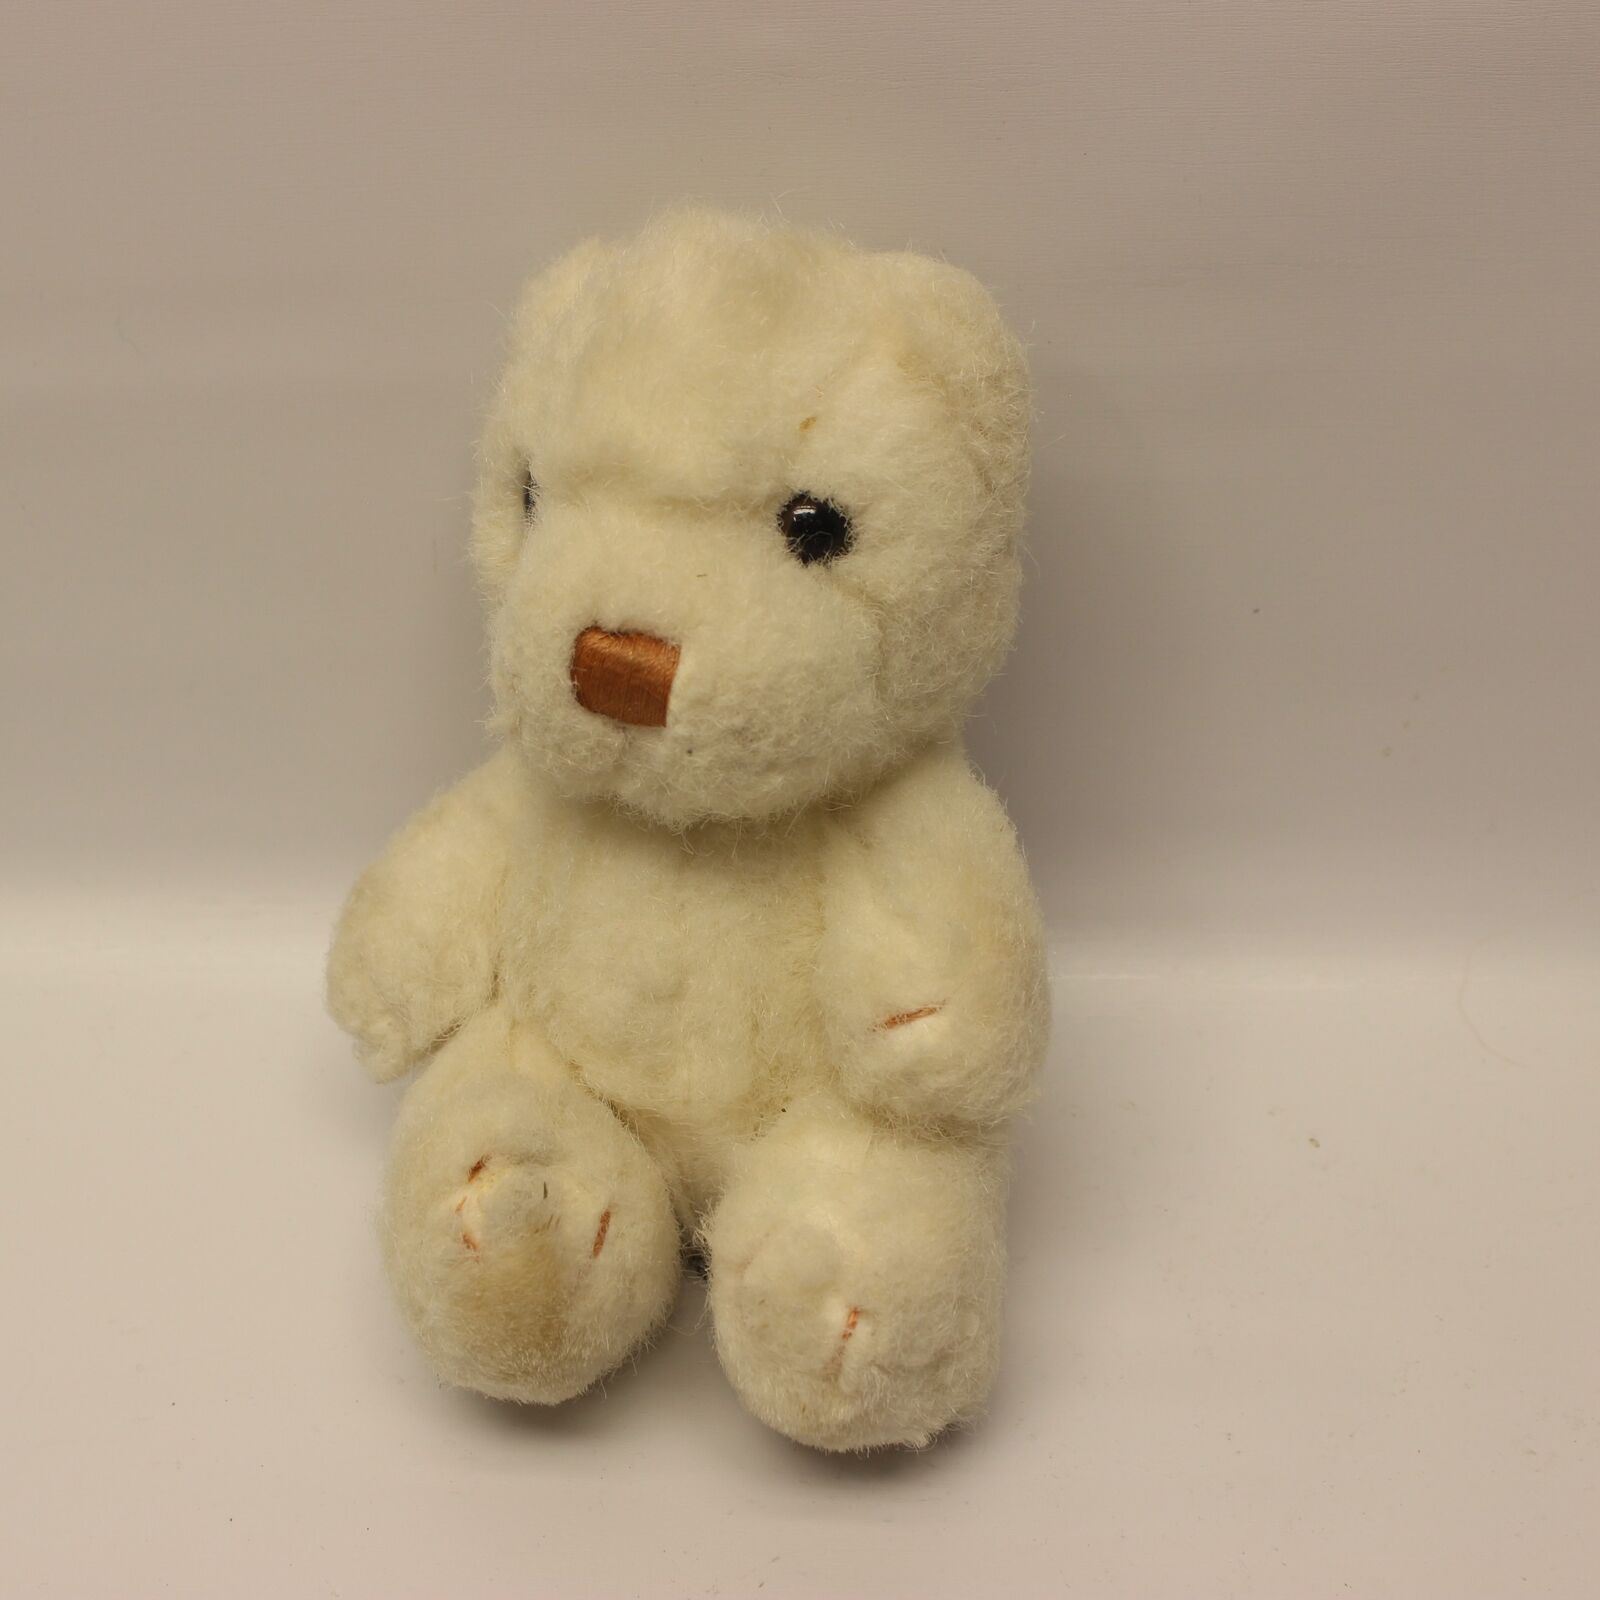 Soft Teddy Bear Buddy Kids Stuffed Toy Plush